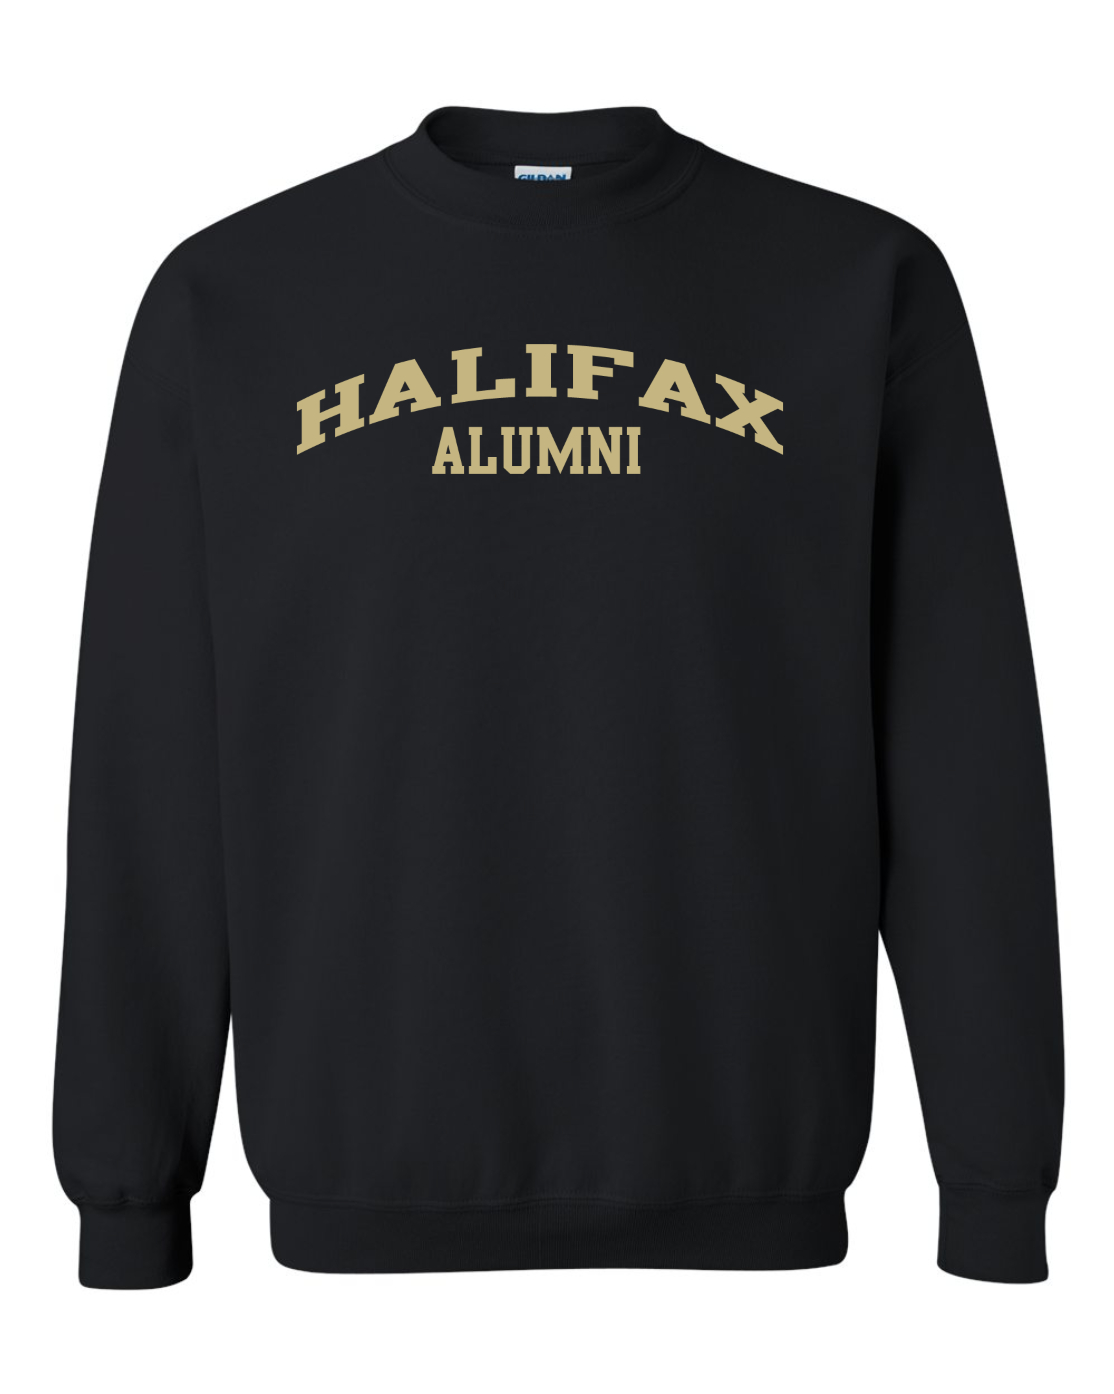 Halifax Standard Crewneck - ALUMNI